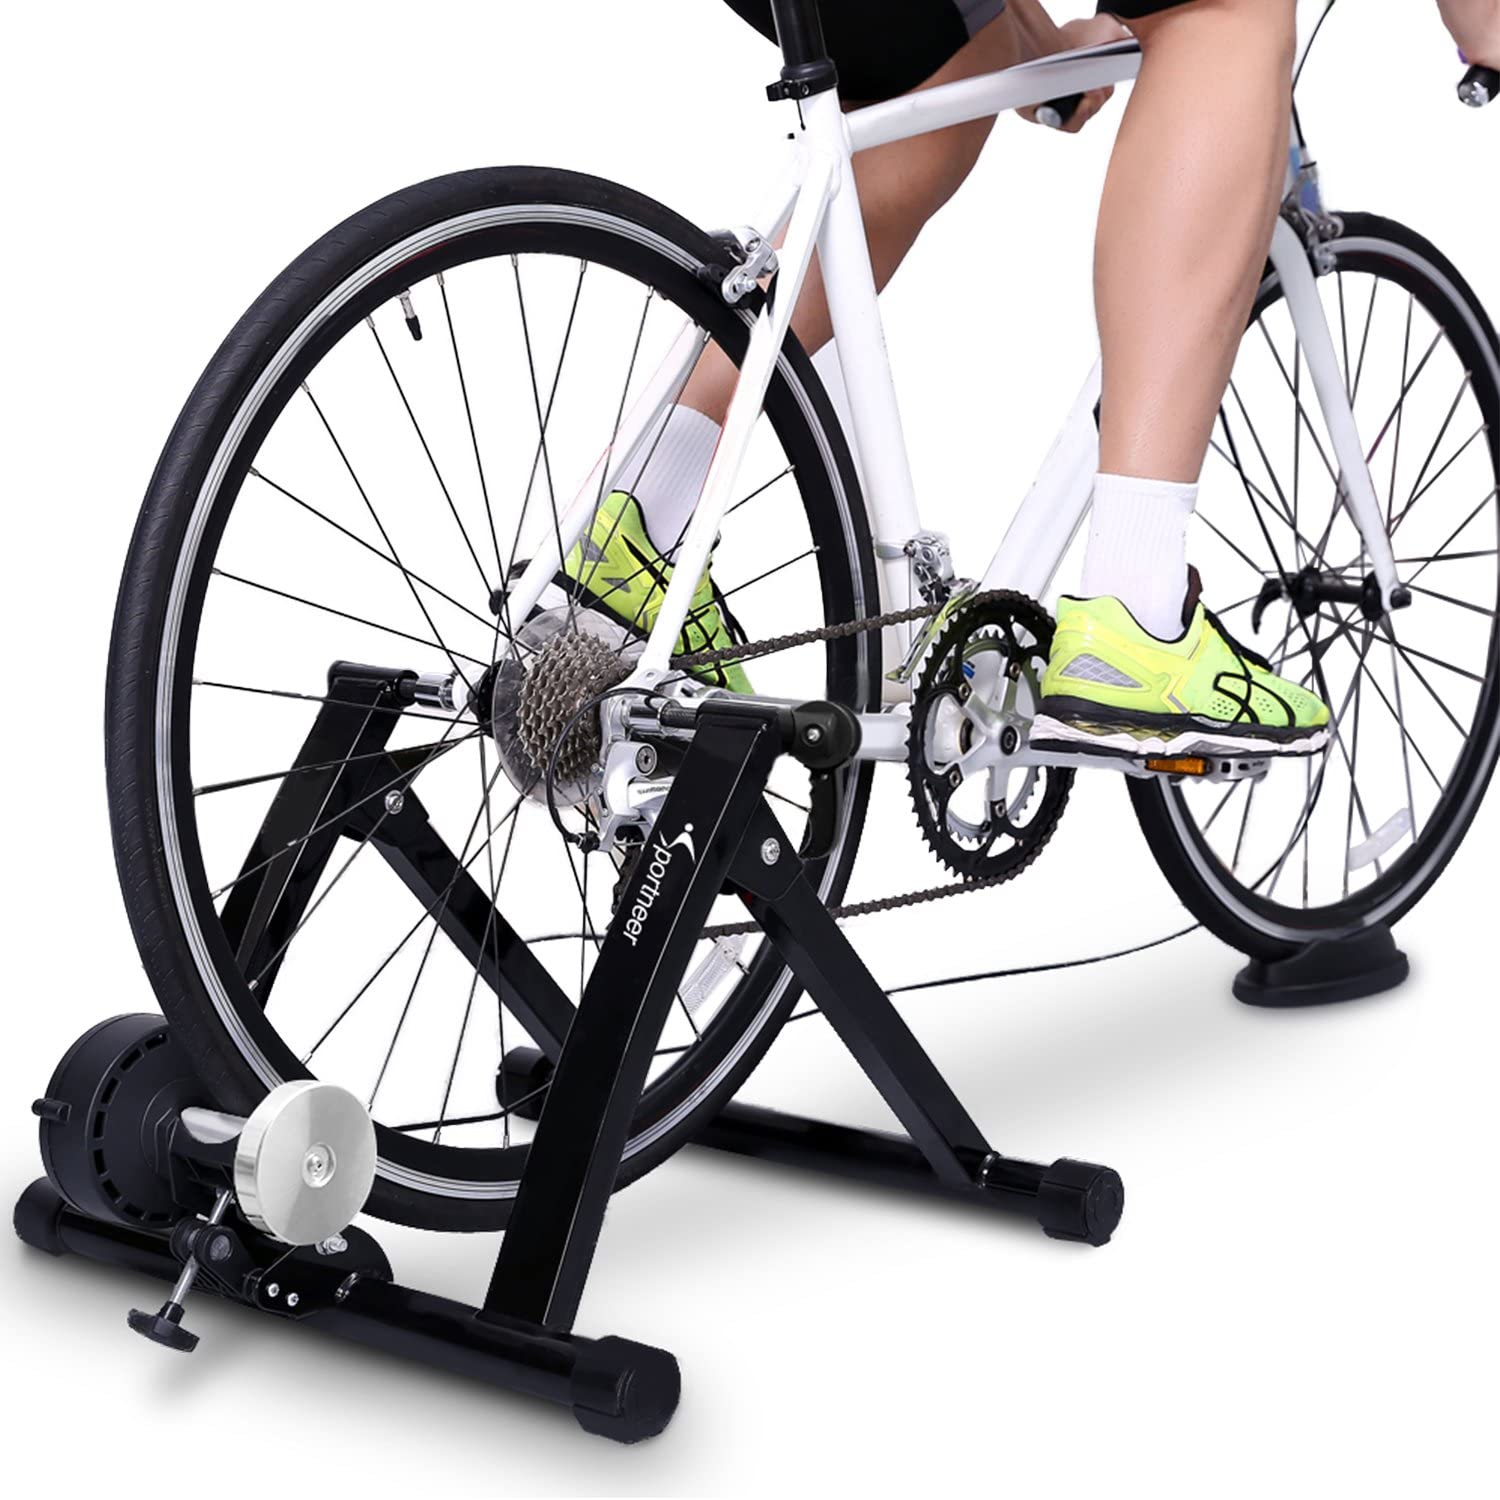 Sportneer Noise Reduction Magnetic Bike Trainer Stand